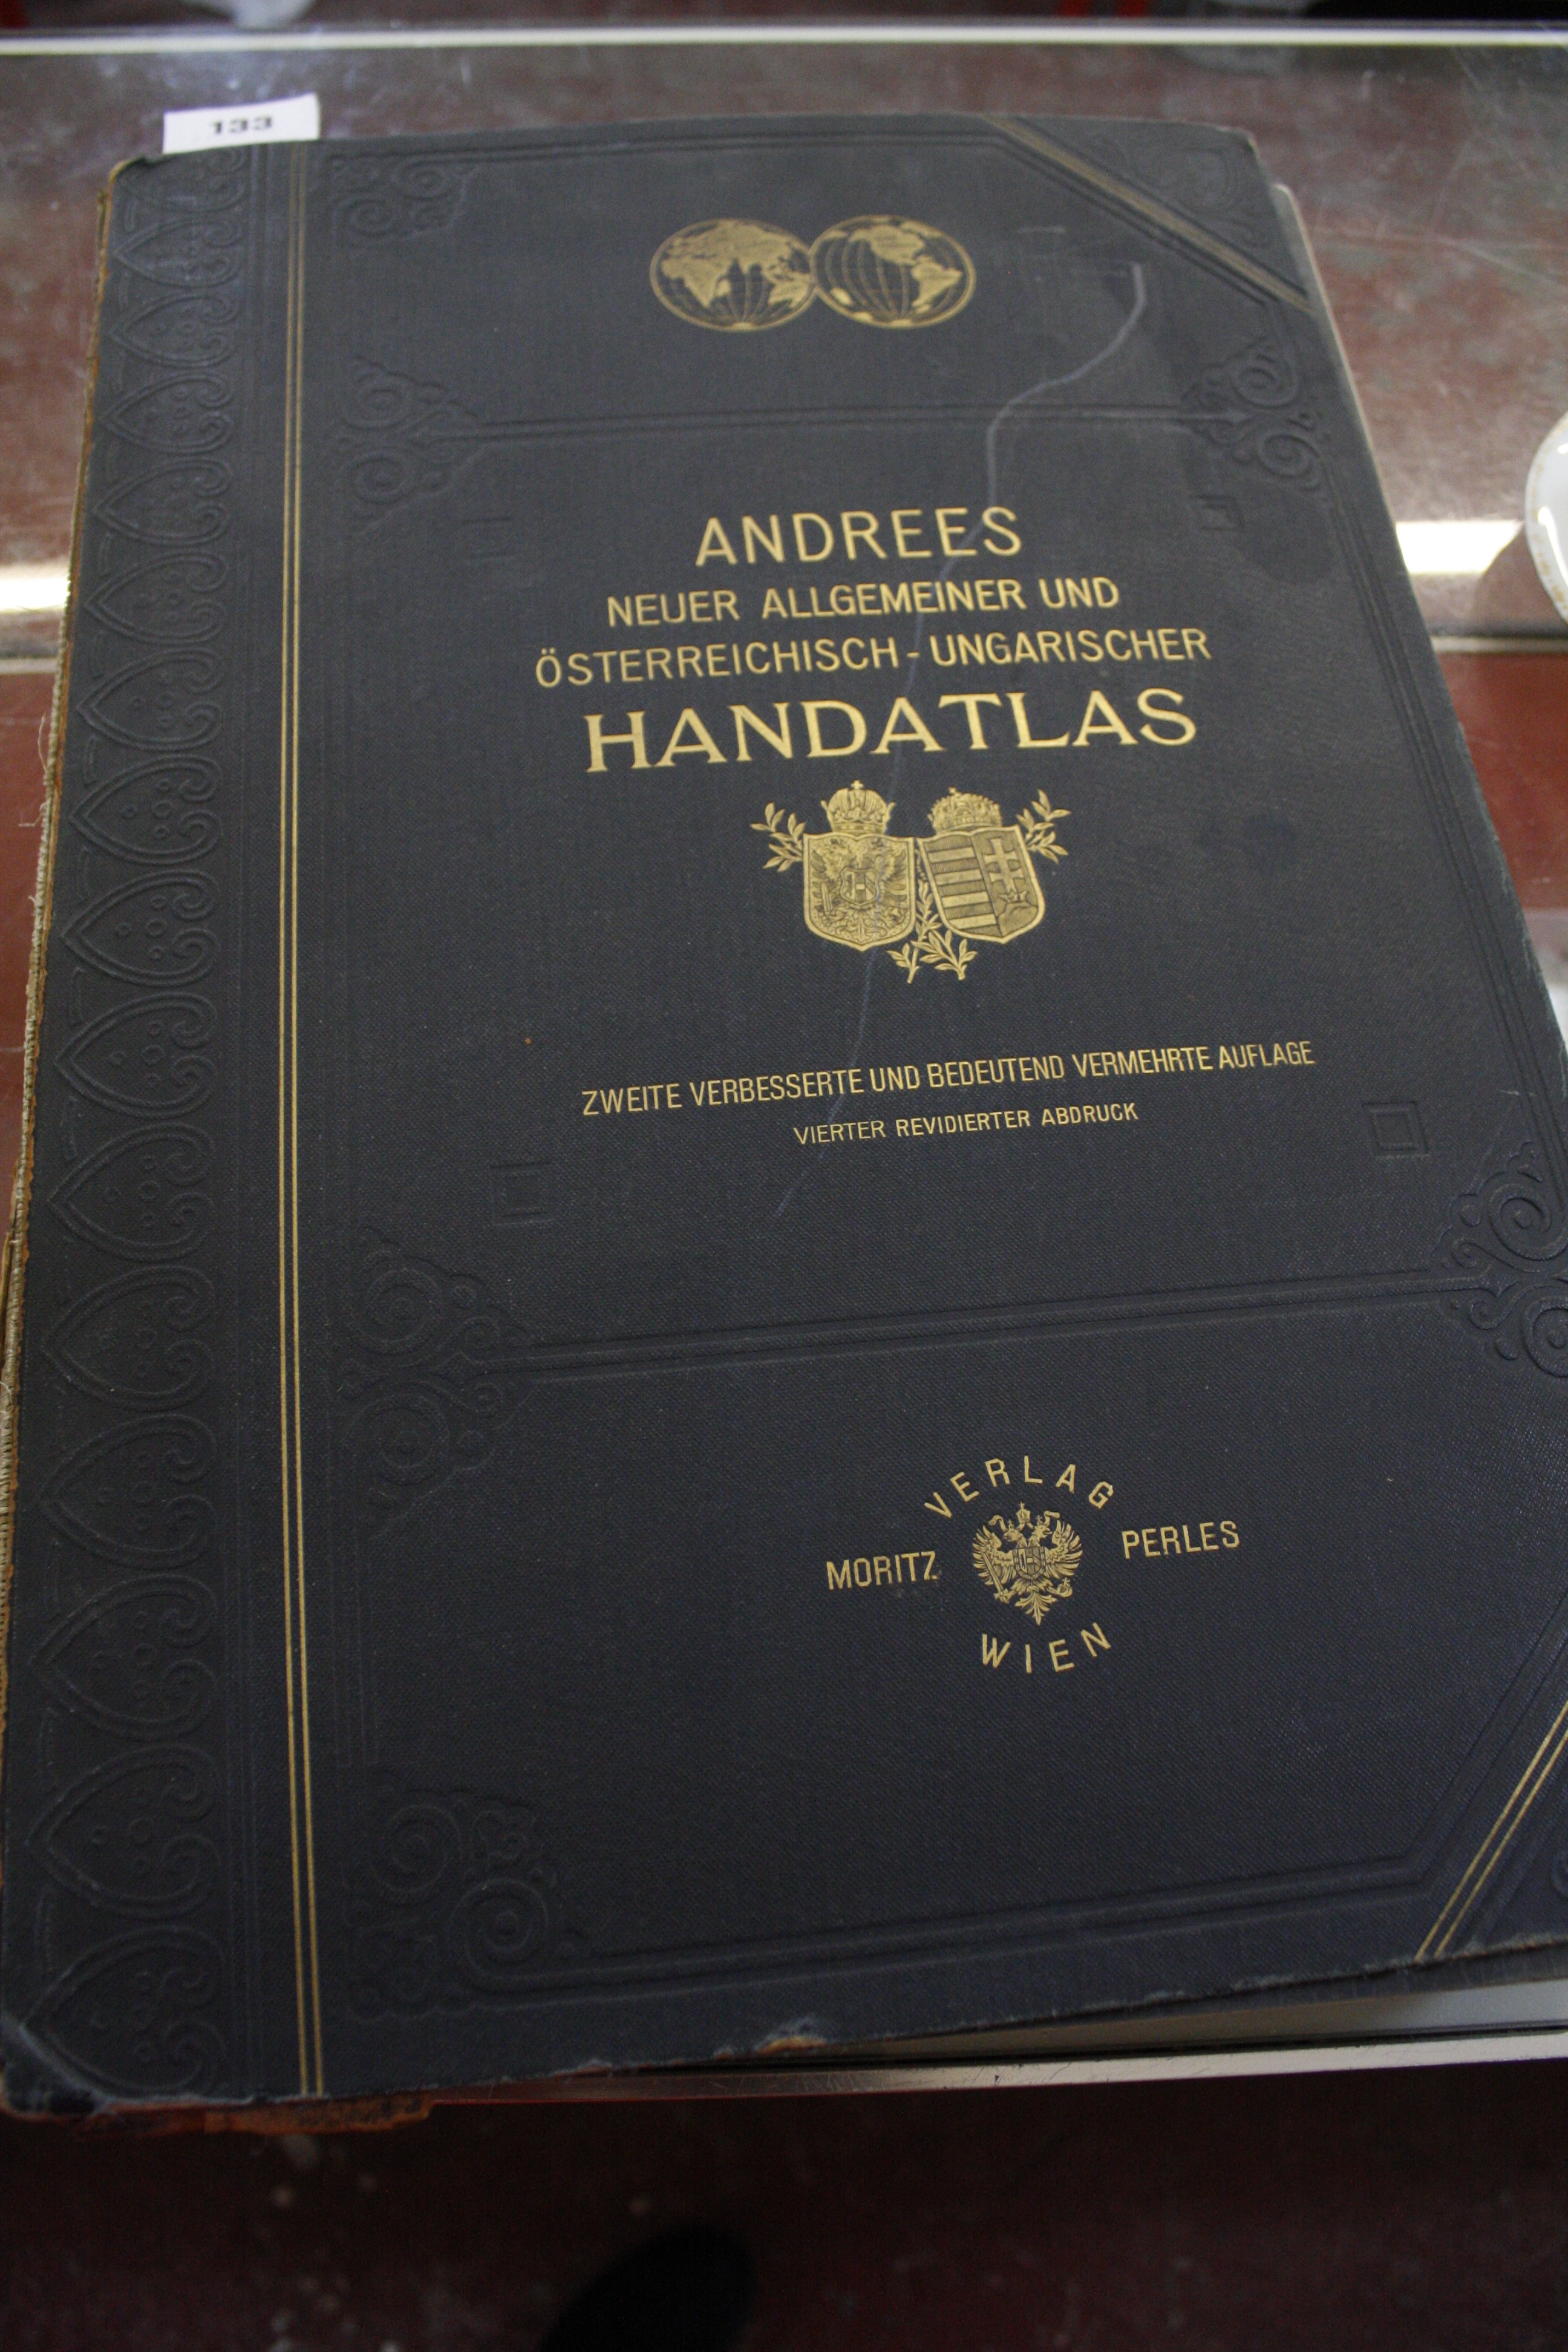 Andrees Allgemeiner Handatlas, Professor A. Scobel, second edition, 1913, for the Austrian and